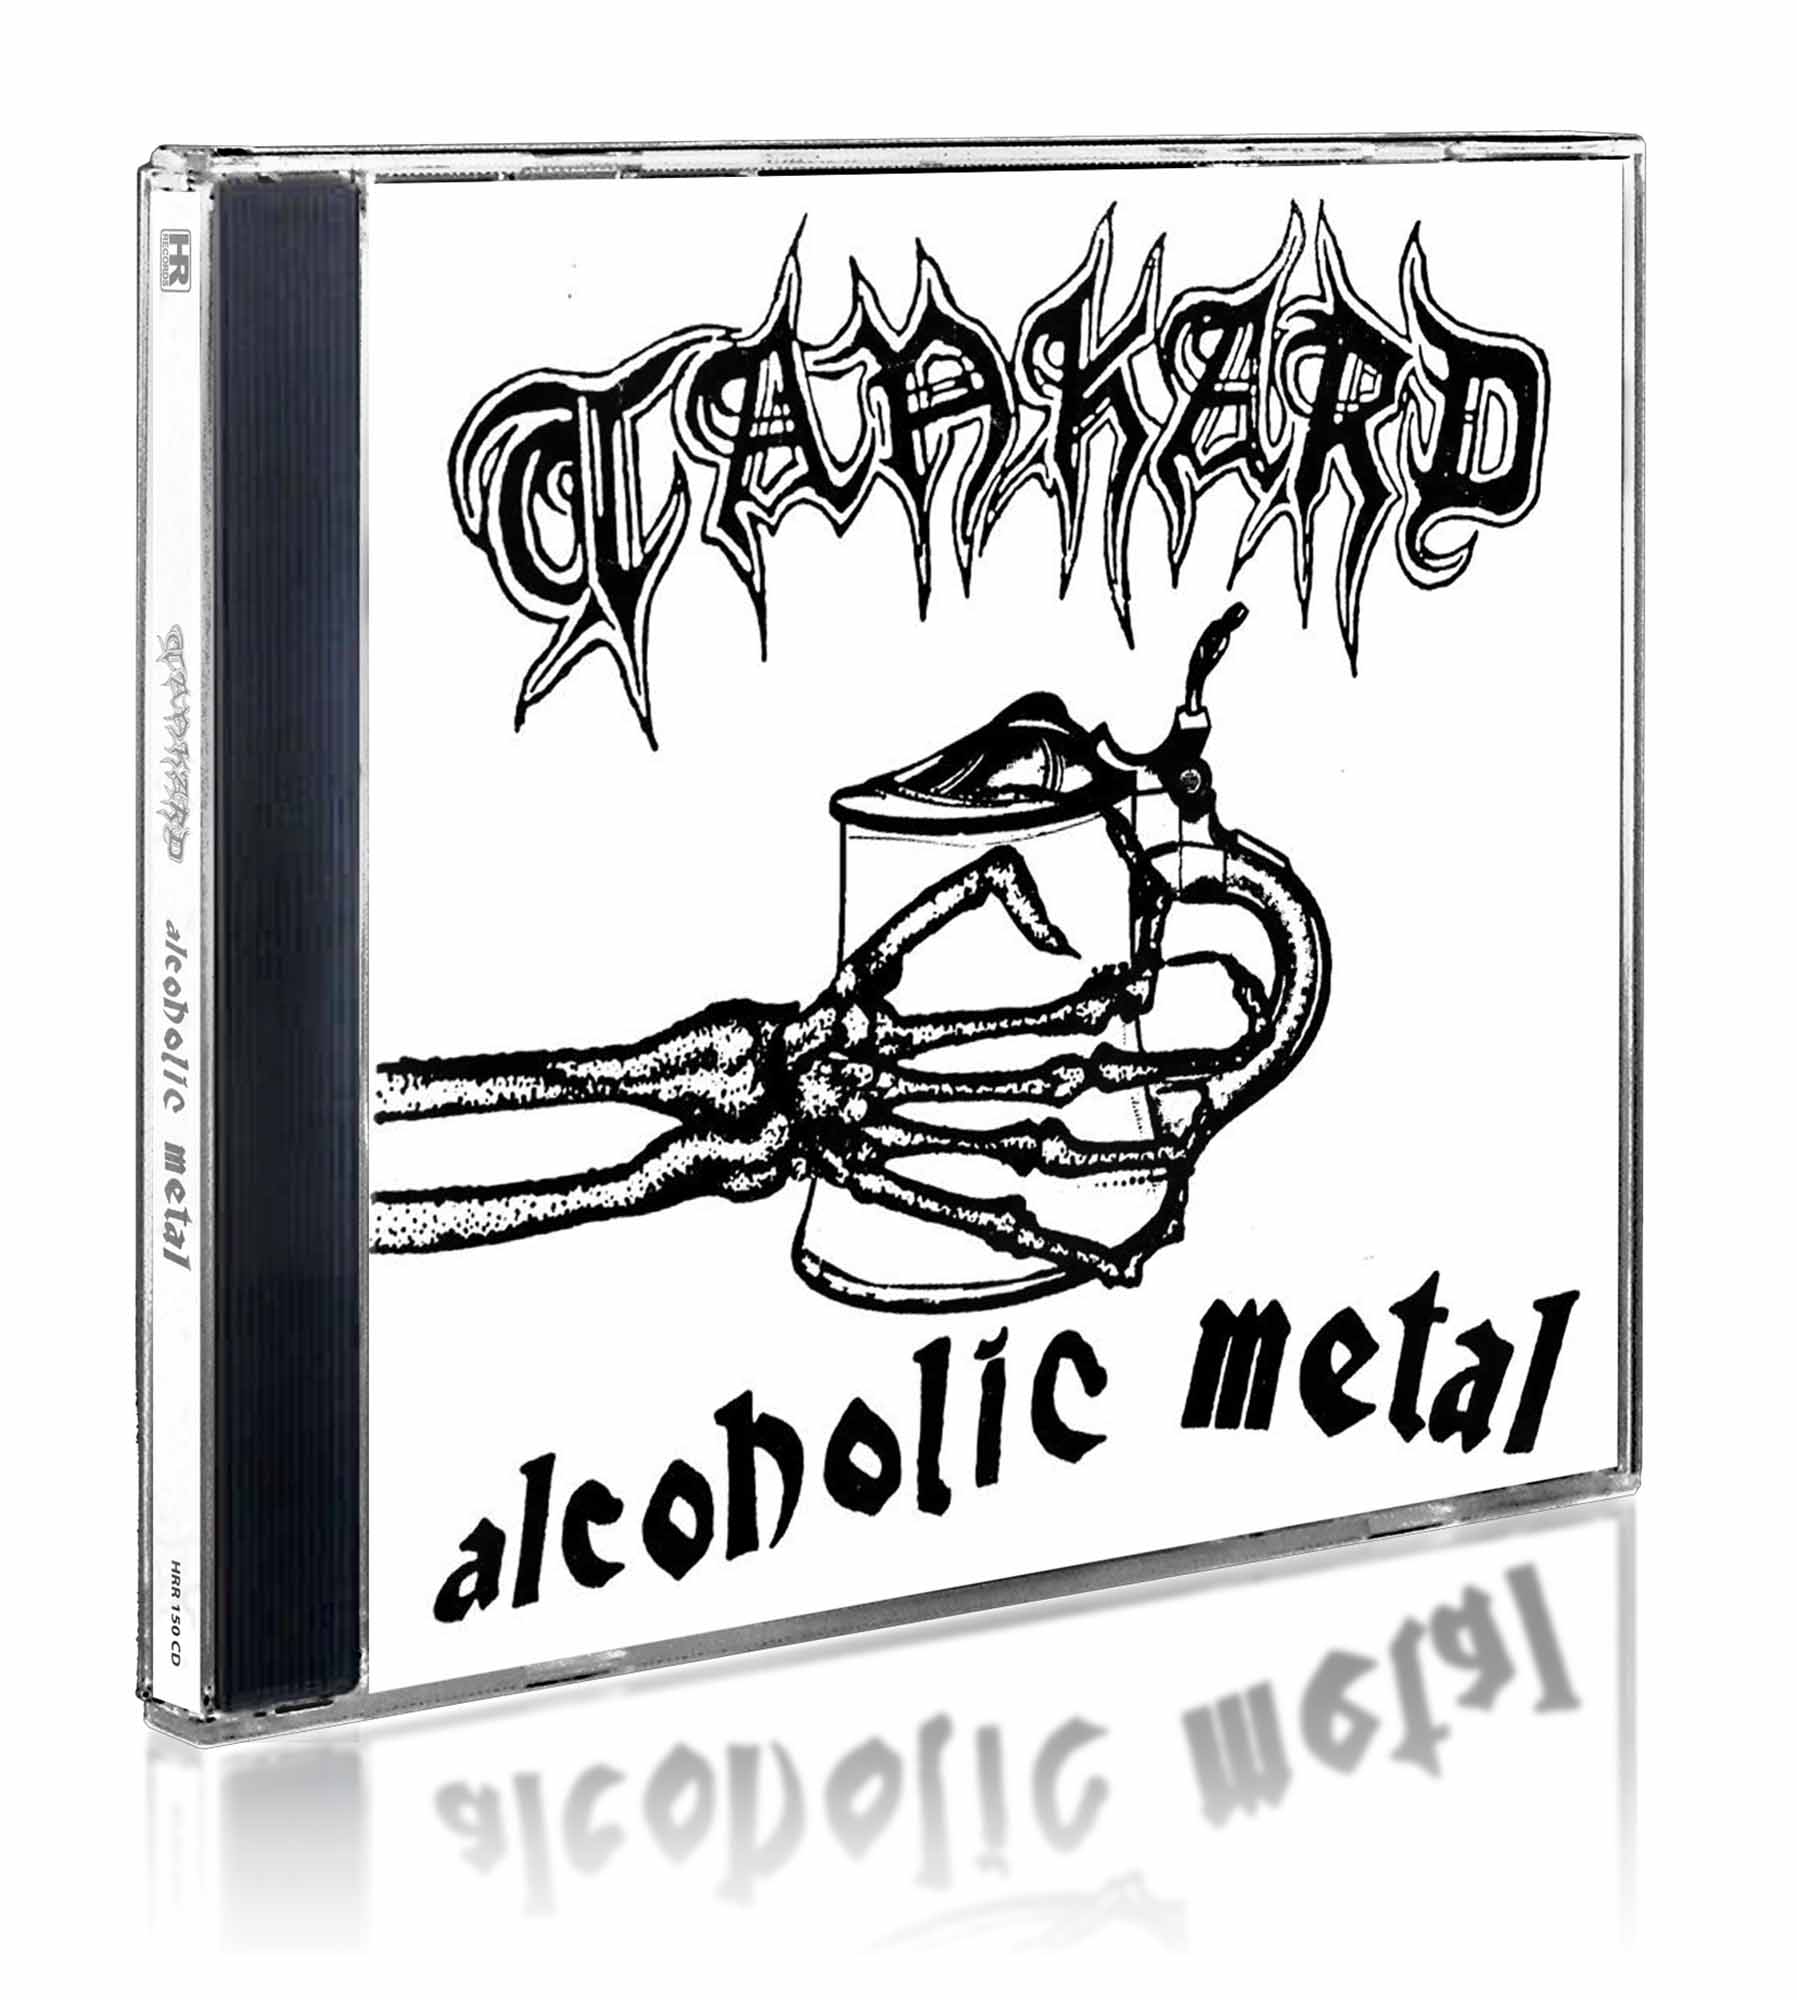 TANKARD - Alcoholic Metal  CD